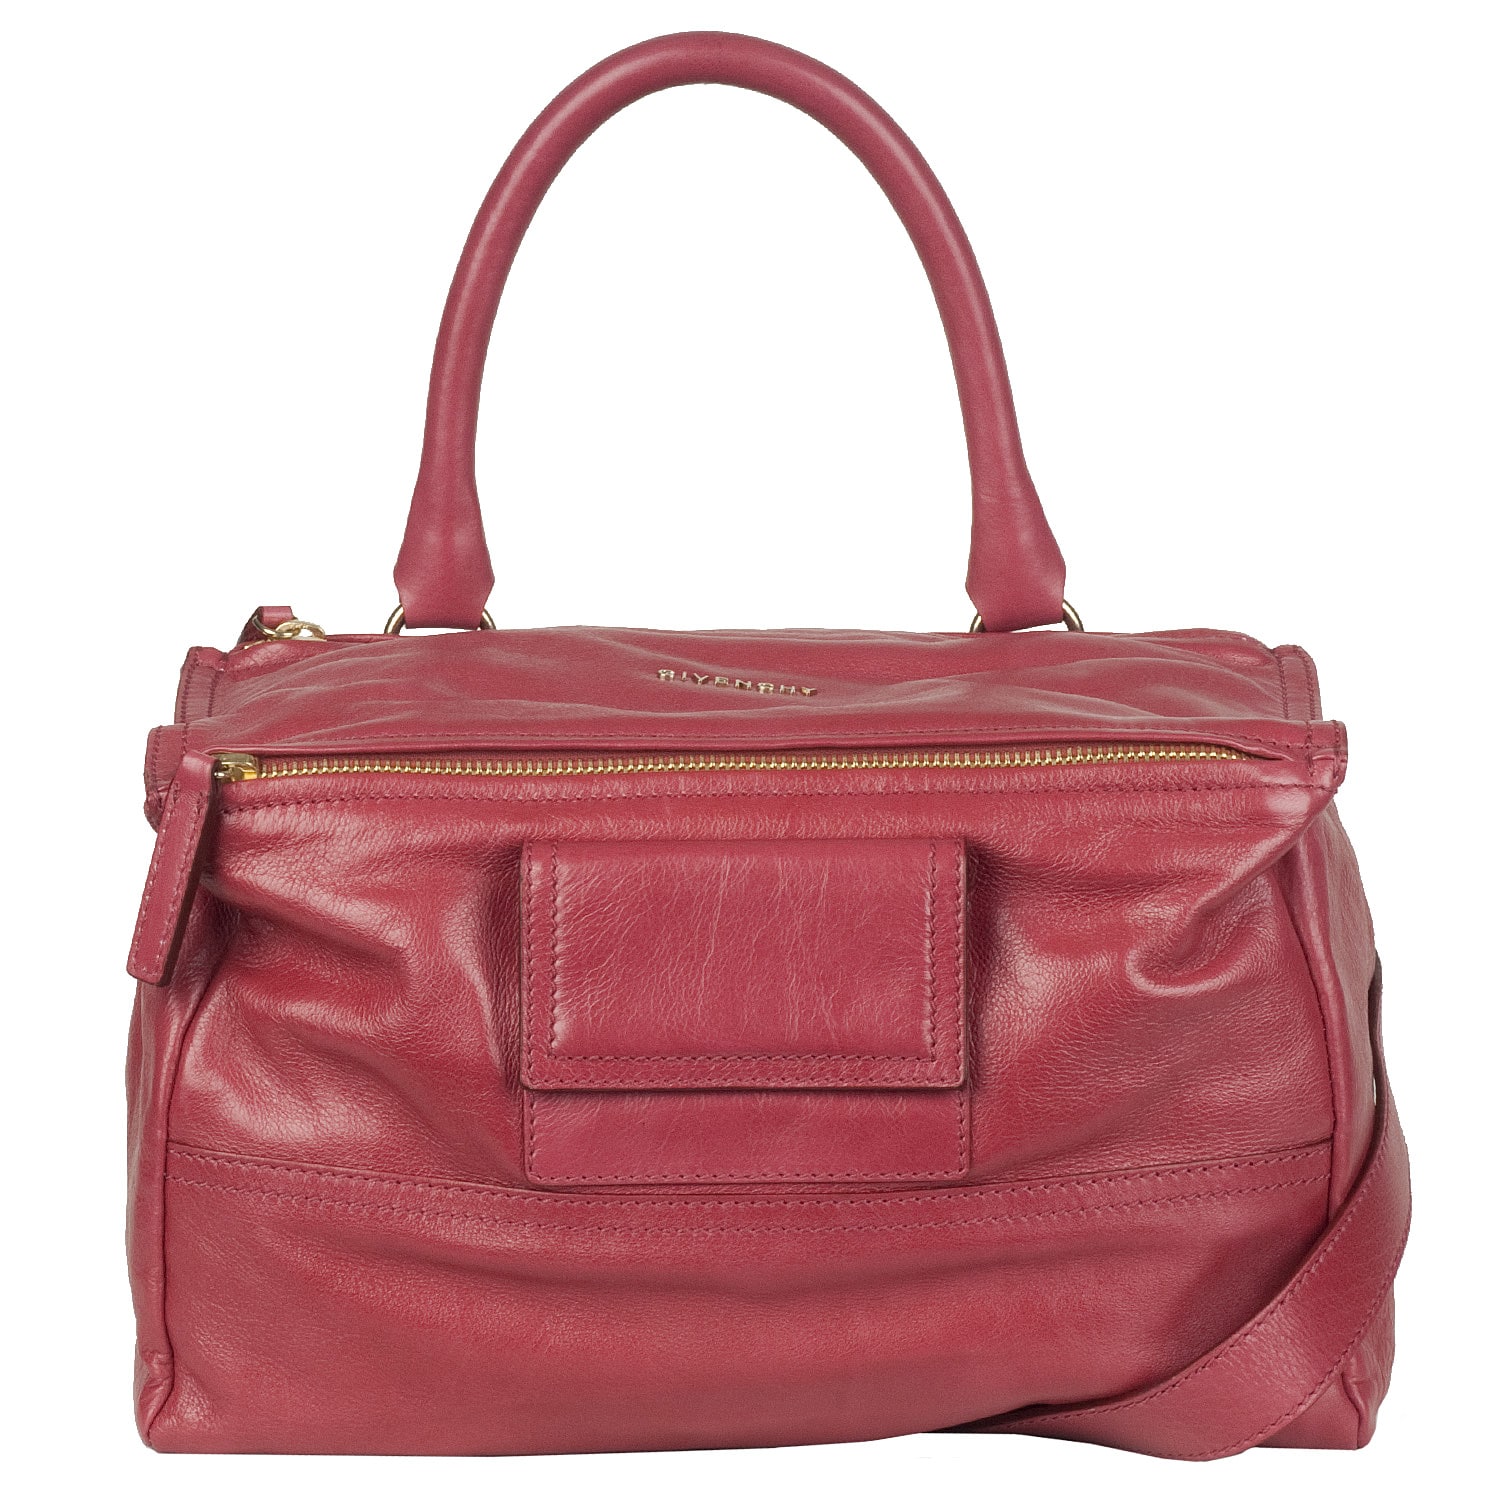 Givenchy Medium Pandora Pink Leather Messenger Bag